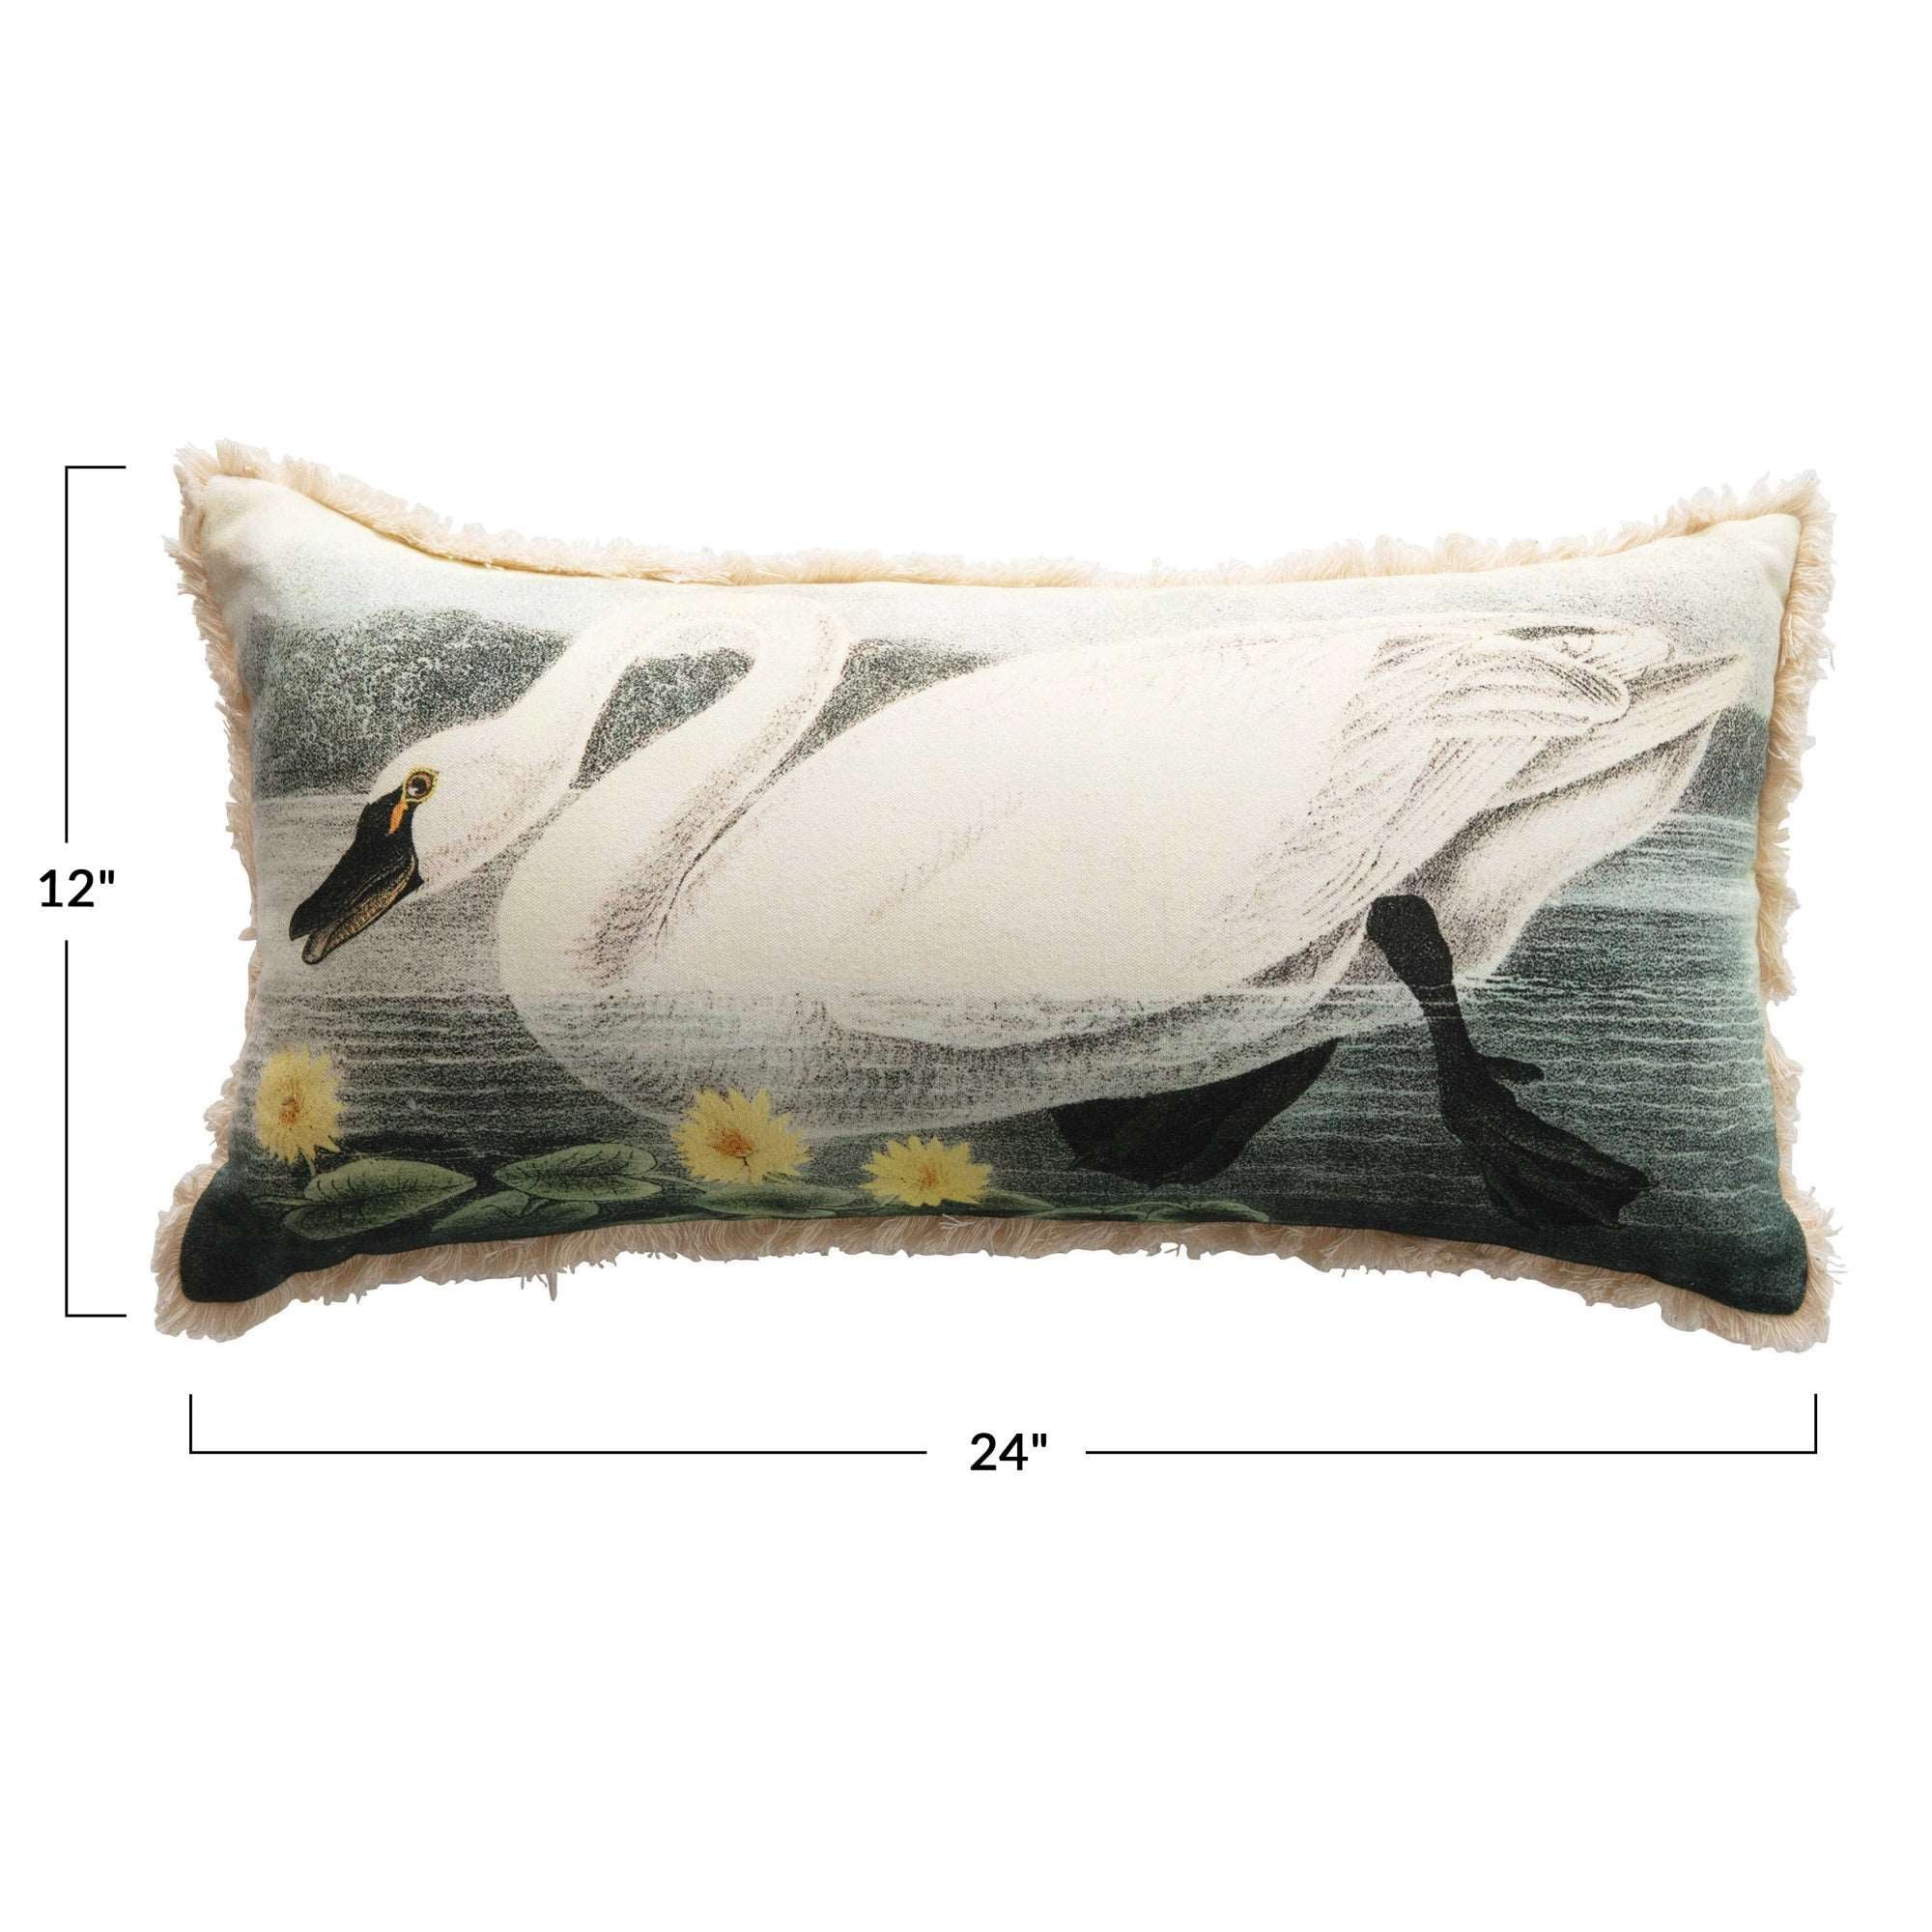 Cotton Lumbar Pillow with Swan & Flowers